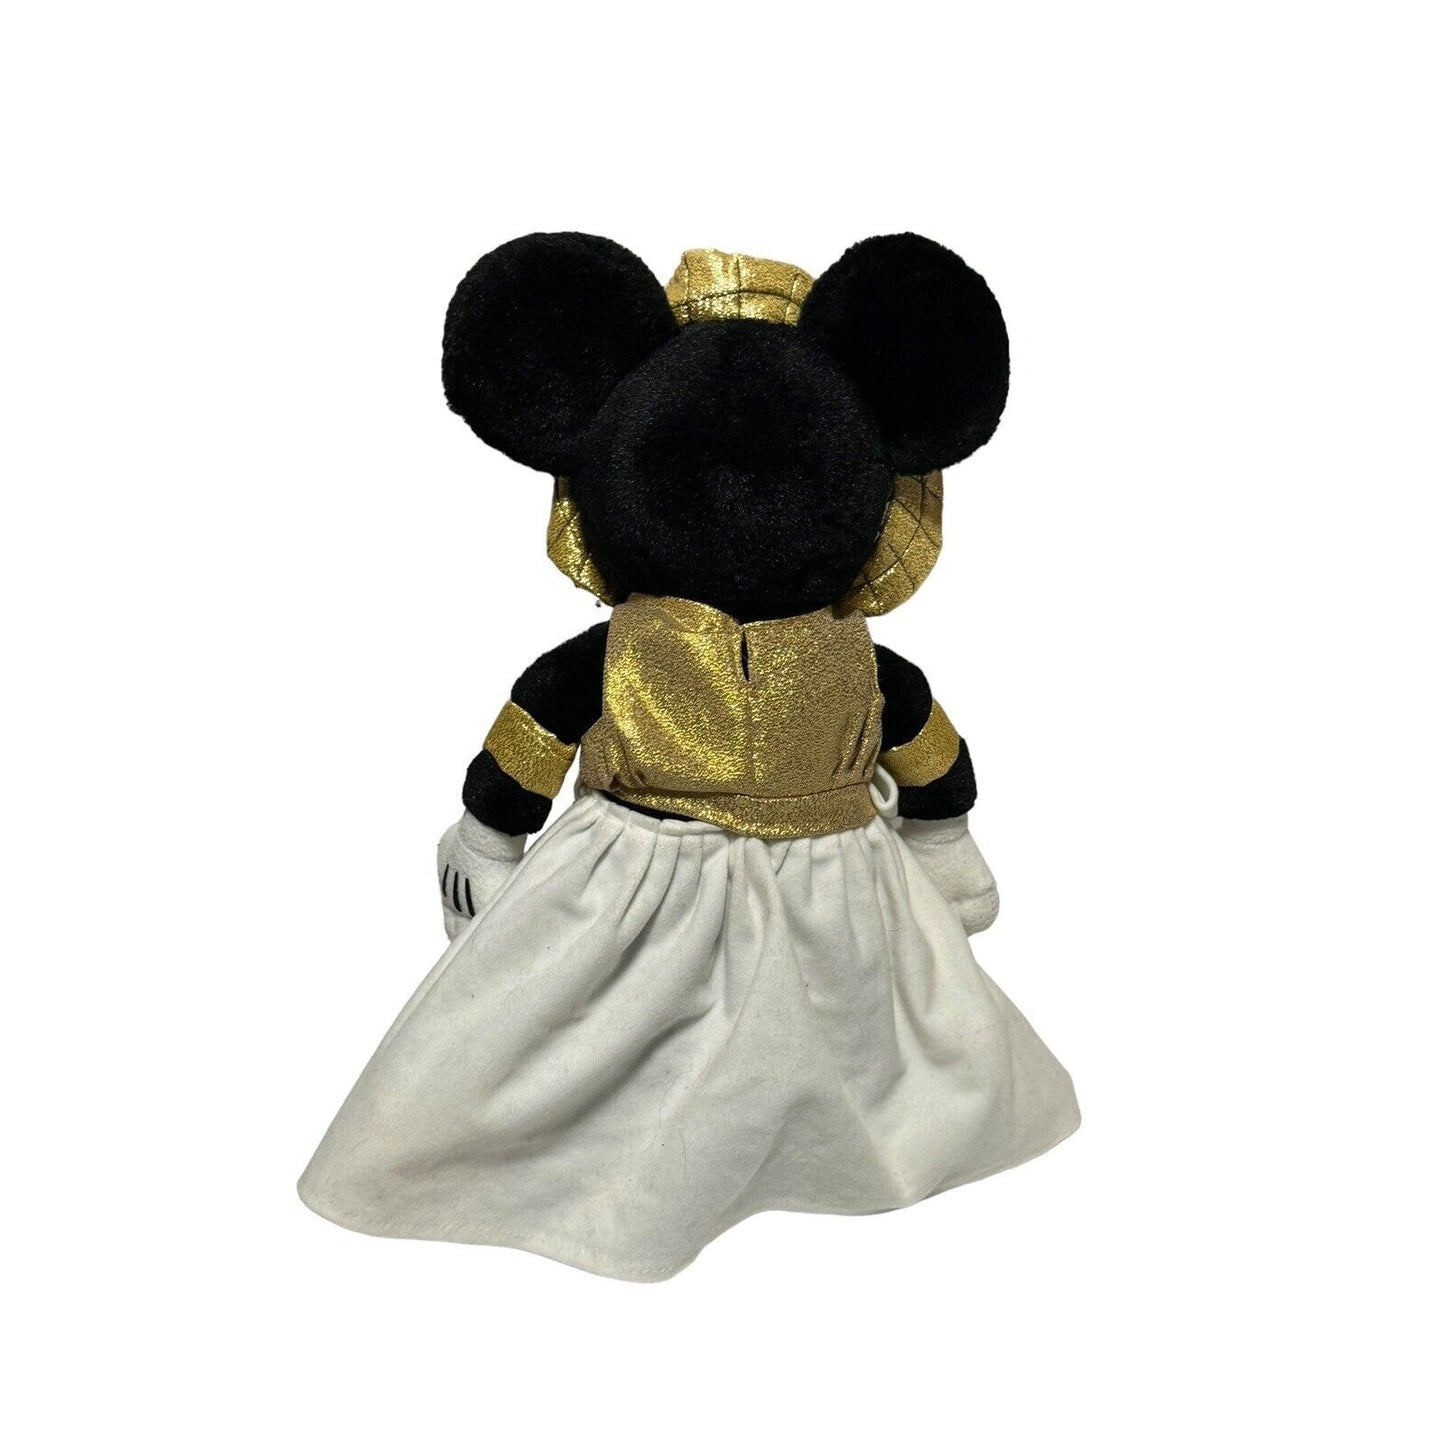 The Disney Store Minnie Mouse Roman Empire Toga Stuffed Plush Animal Doll Toy 13